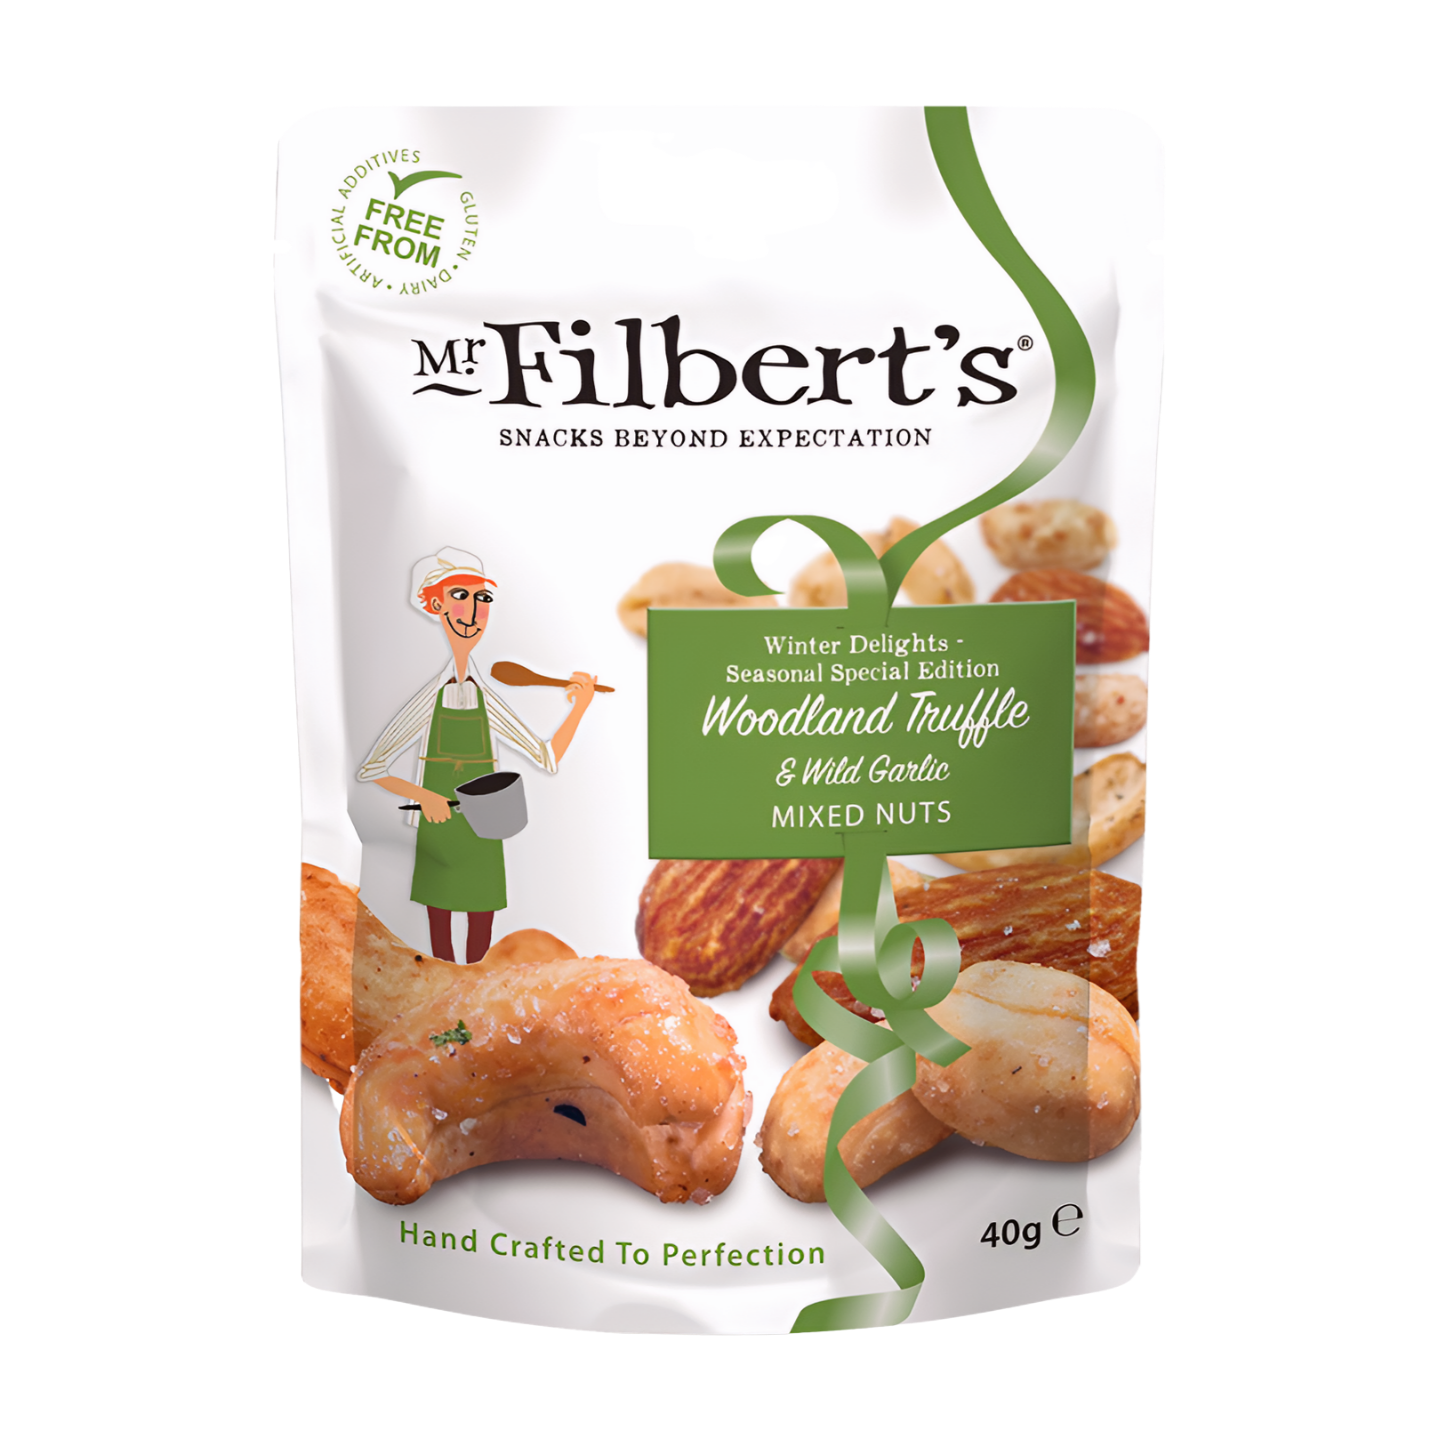 Mr Filbert's Woodland Truffle & Wild Garlic Mixed Nuts (20x40g)